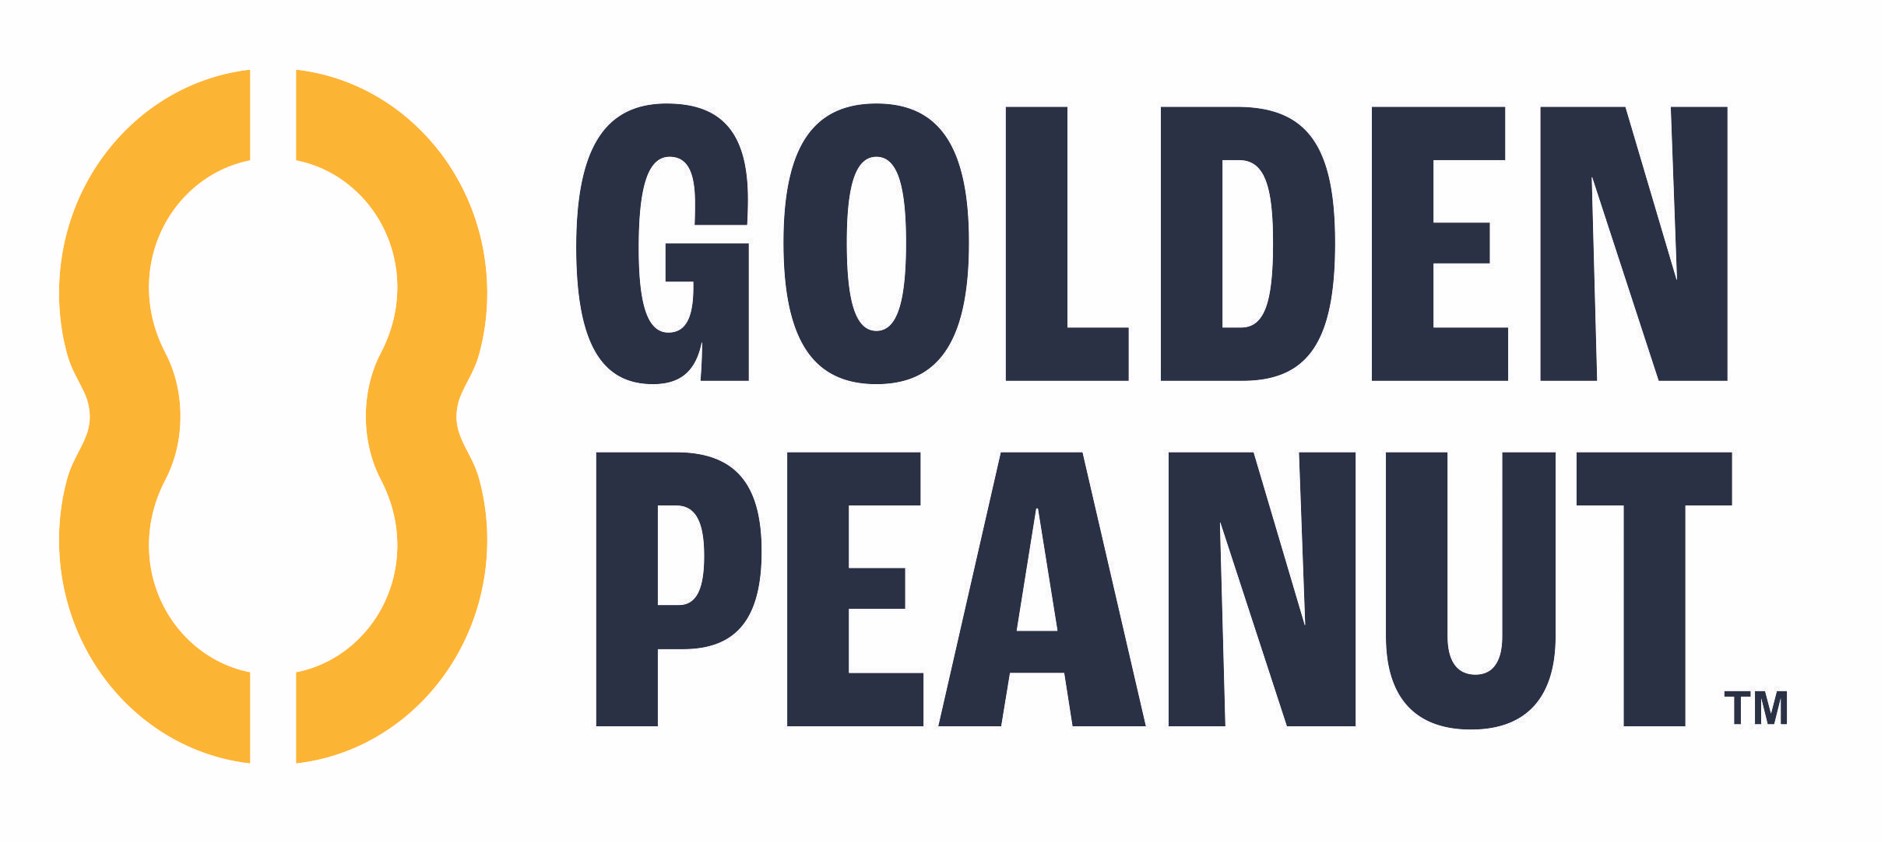 Golden Peanut